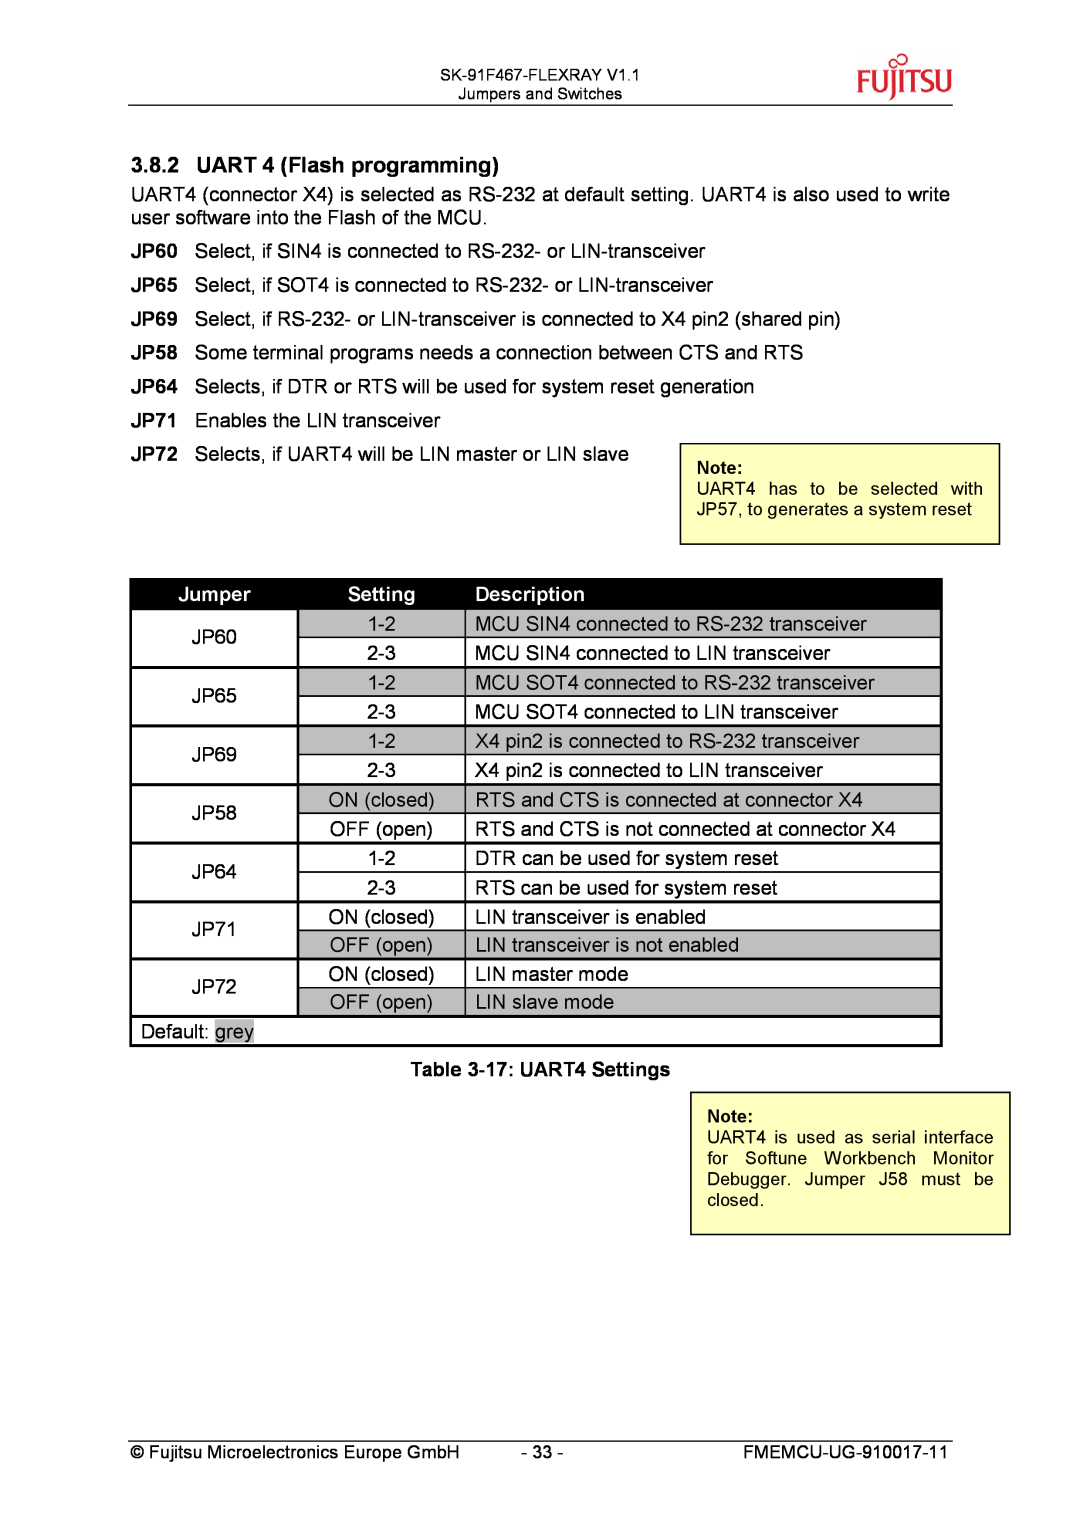 Fujitsu MB88121 SERIES, MB91460 SERIES manual UART 4 Flash programming, 17 UART4 Settings, Jumper, Description 